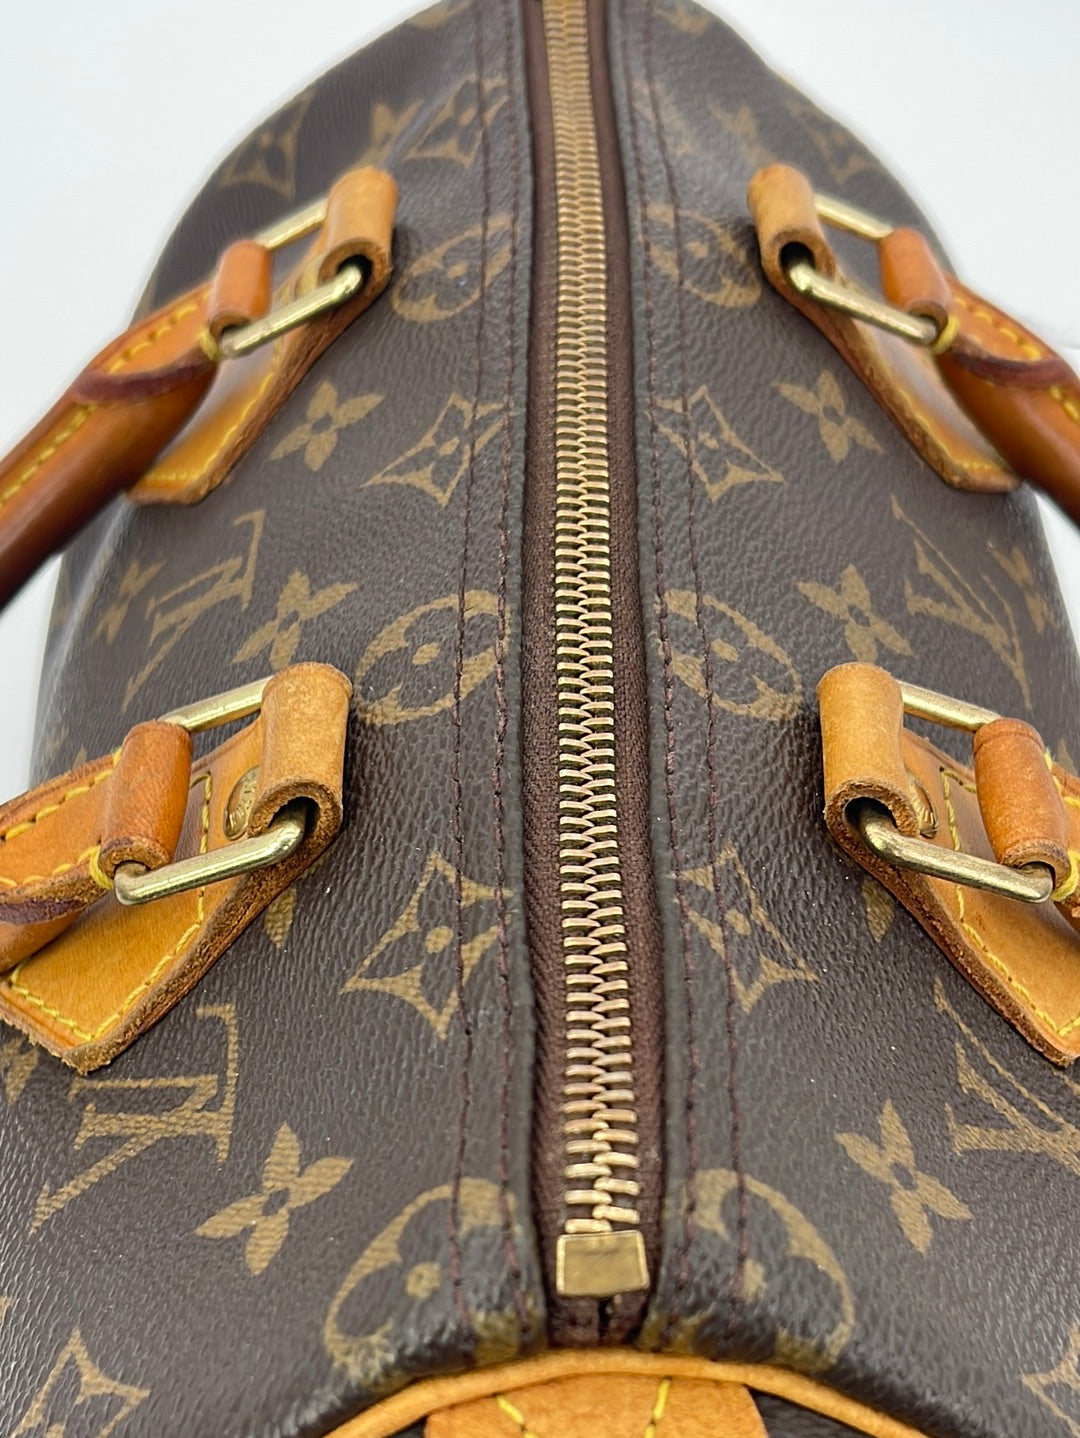 Louis Vuitton, Bags, Vintage Louis Vuitton Speedy